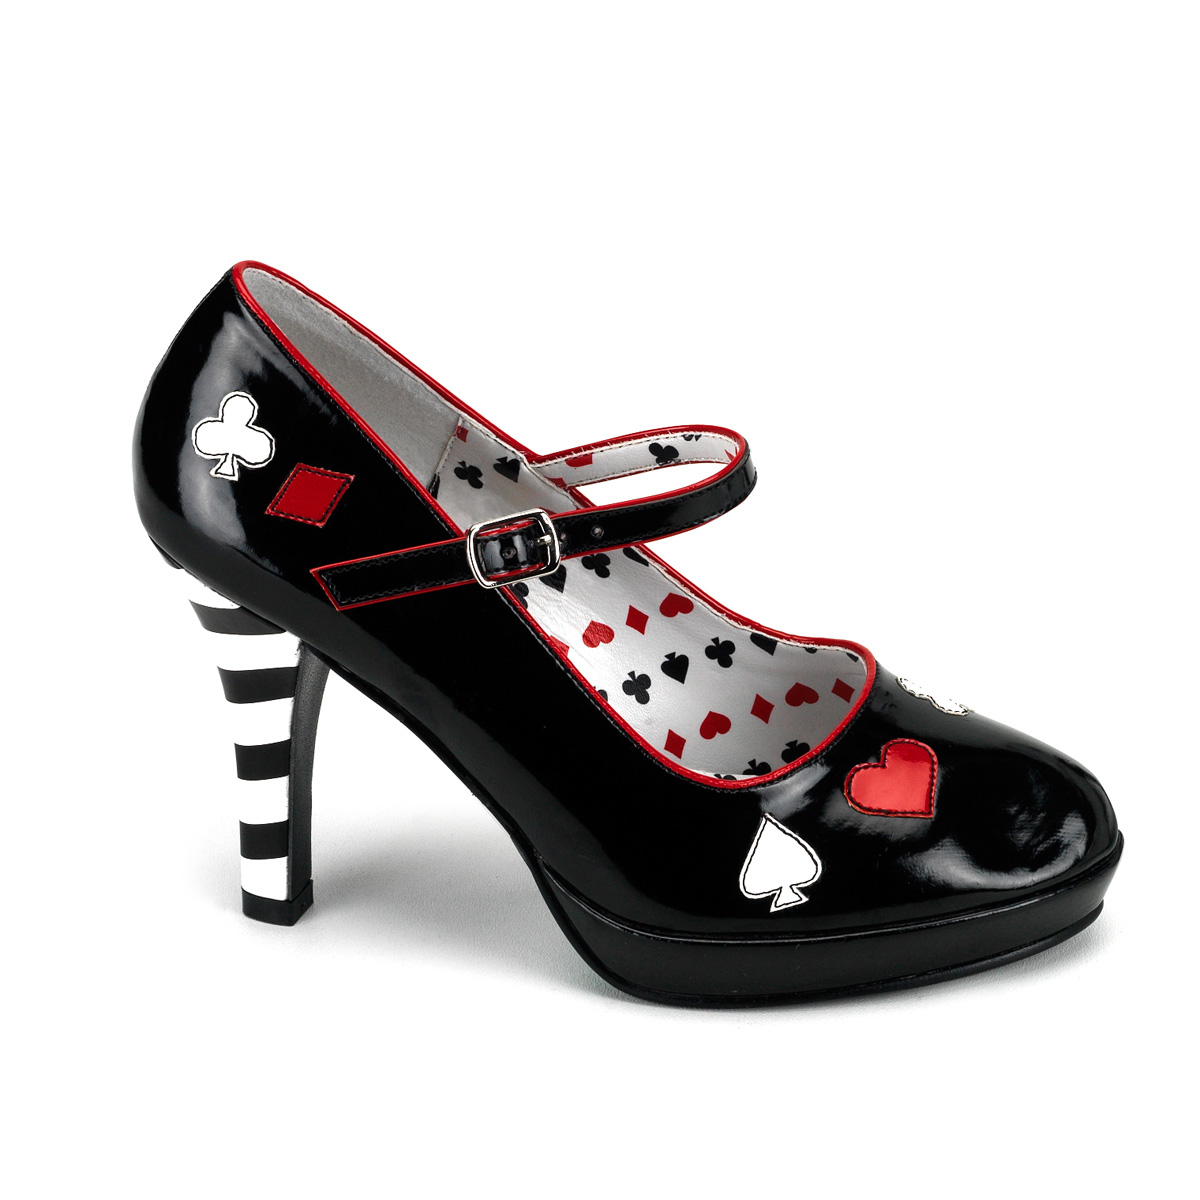 Black 4" queen of hearts platform costume shoes